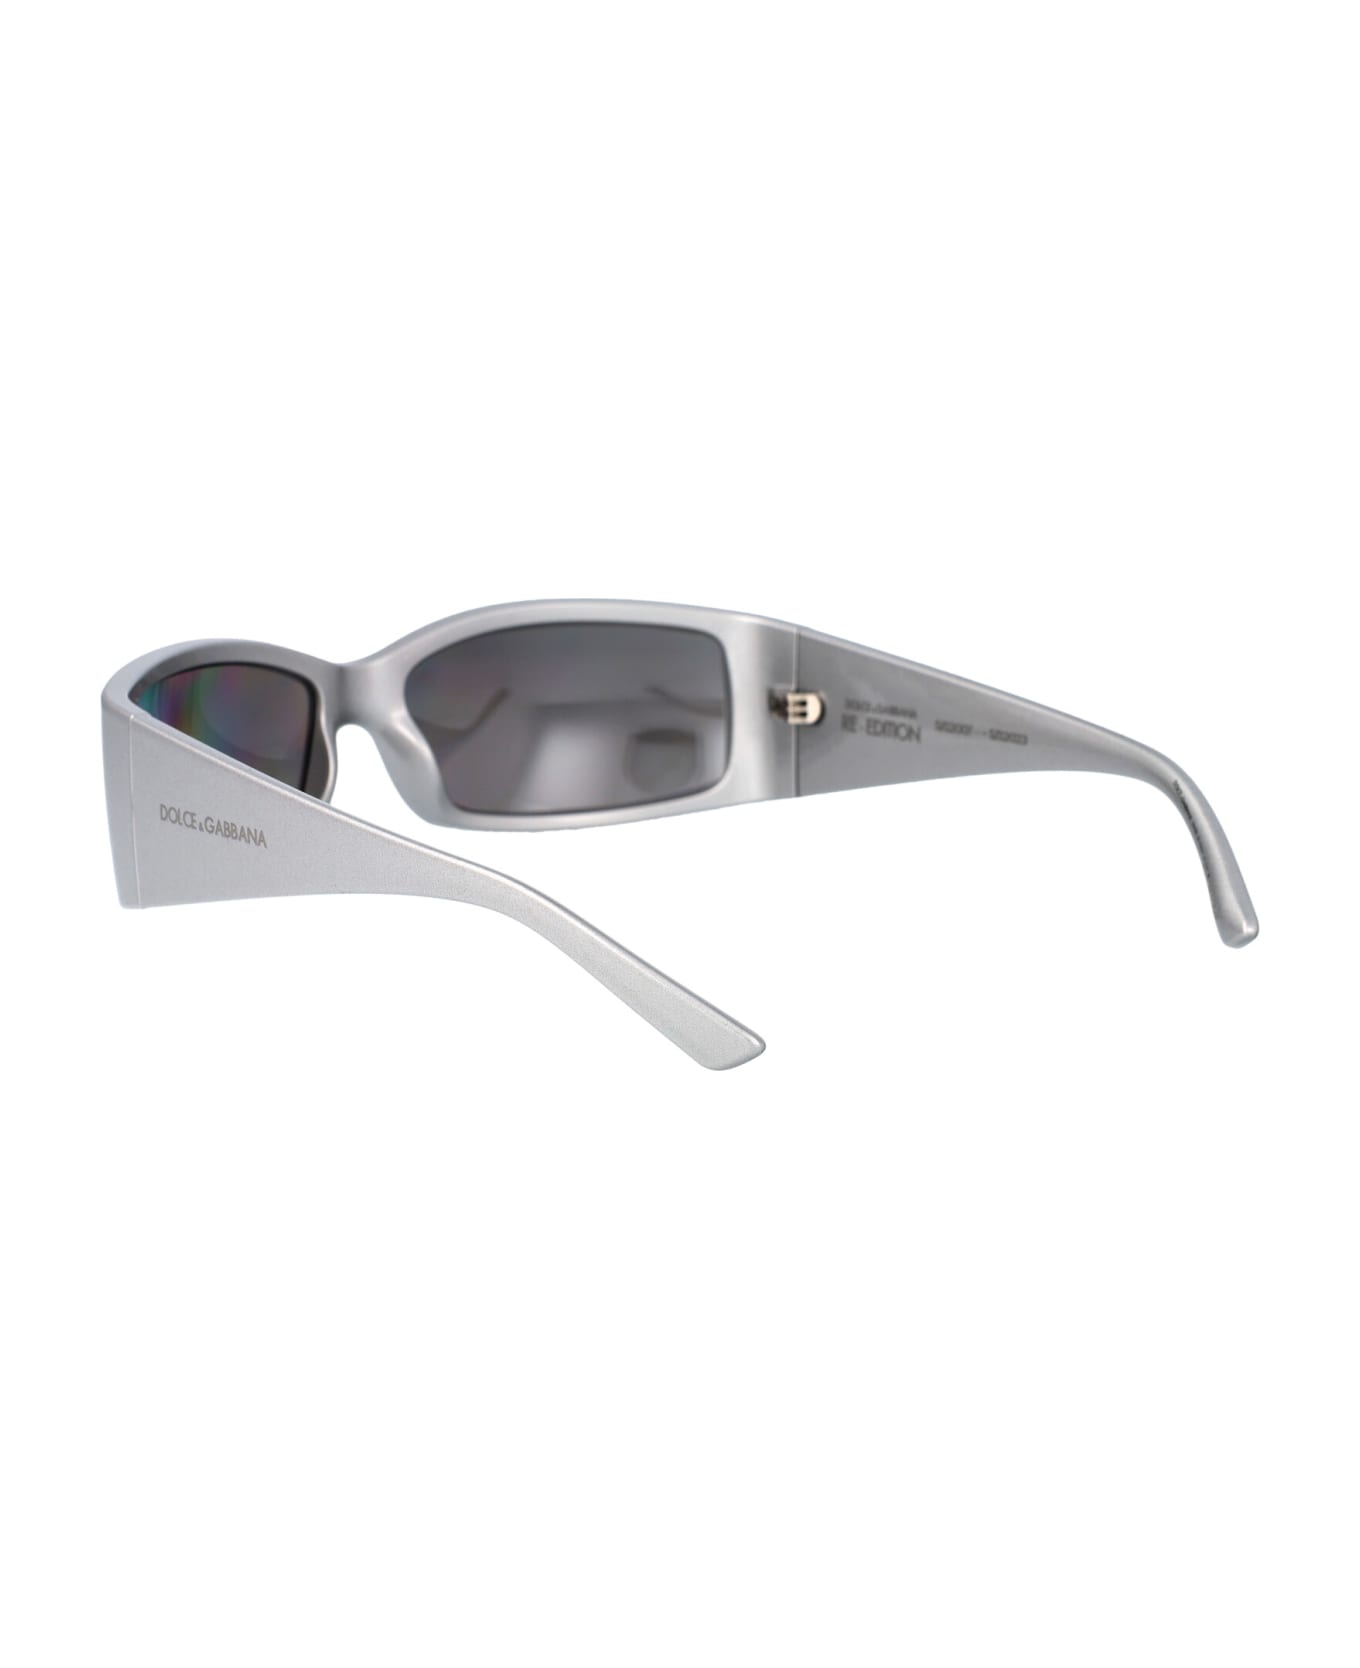 Dolce & Gabbana Eyewear 0dg6188 Sunglasses - 34156G Metallic Grey